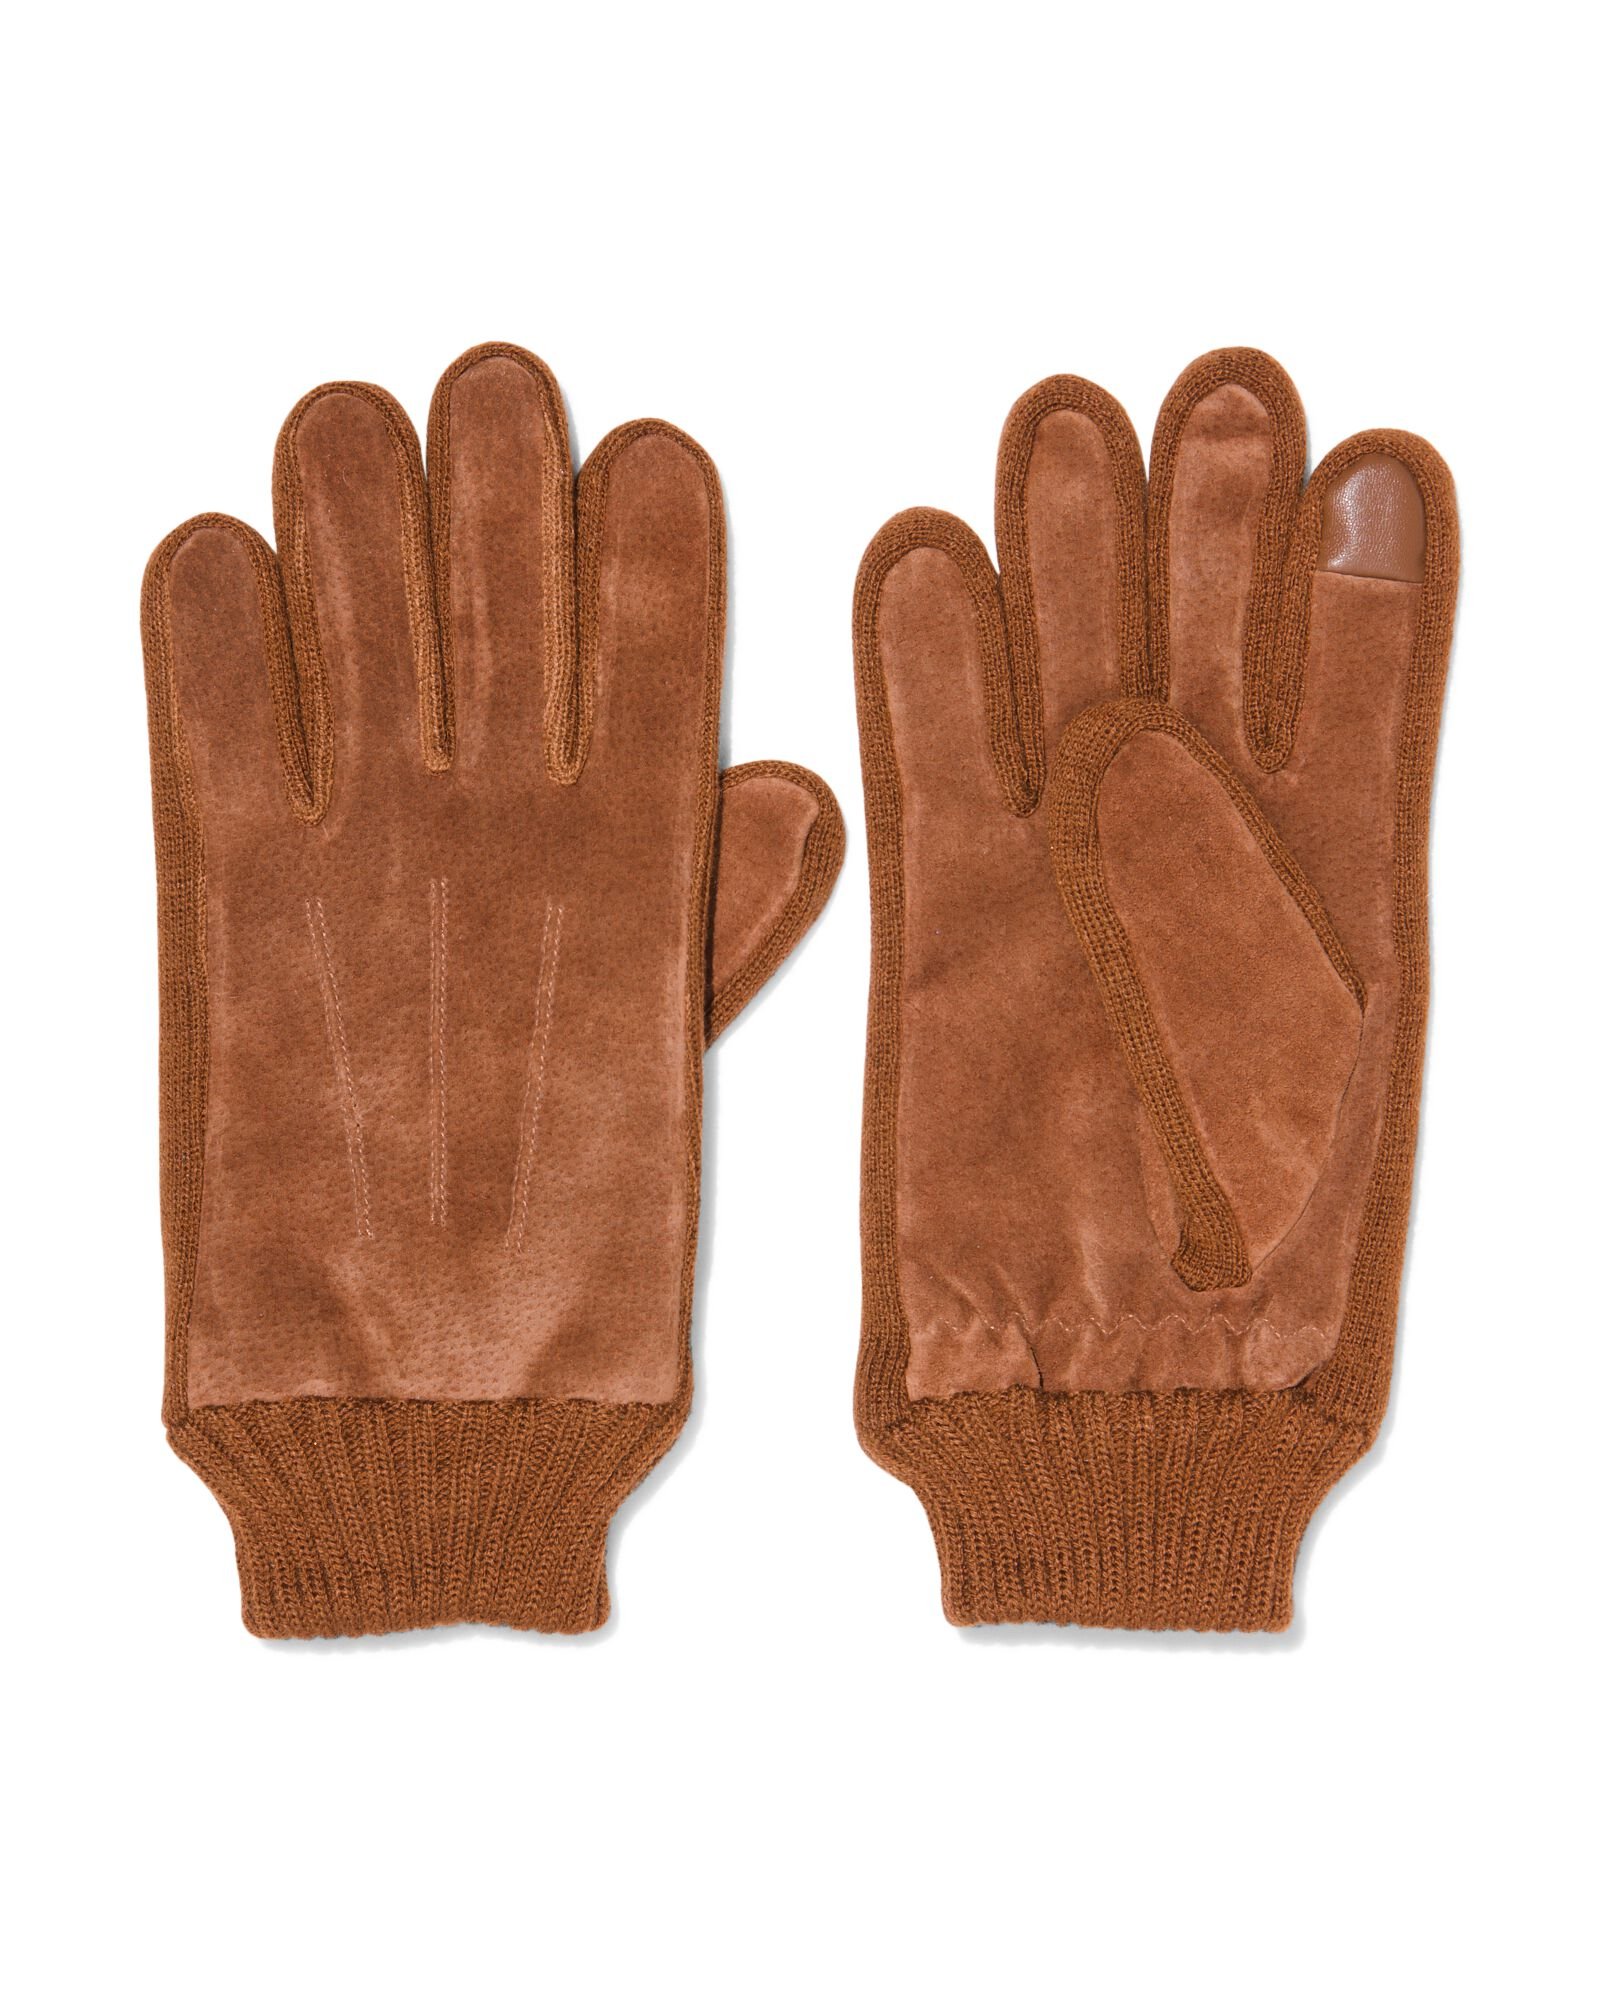 hema gants en daim pour homme marron (marron)